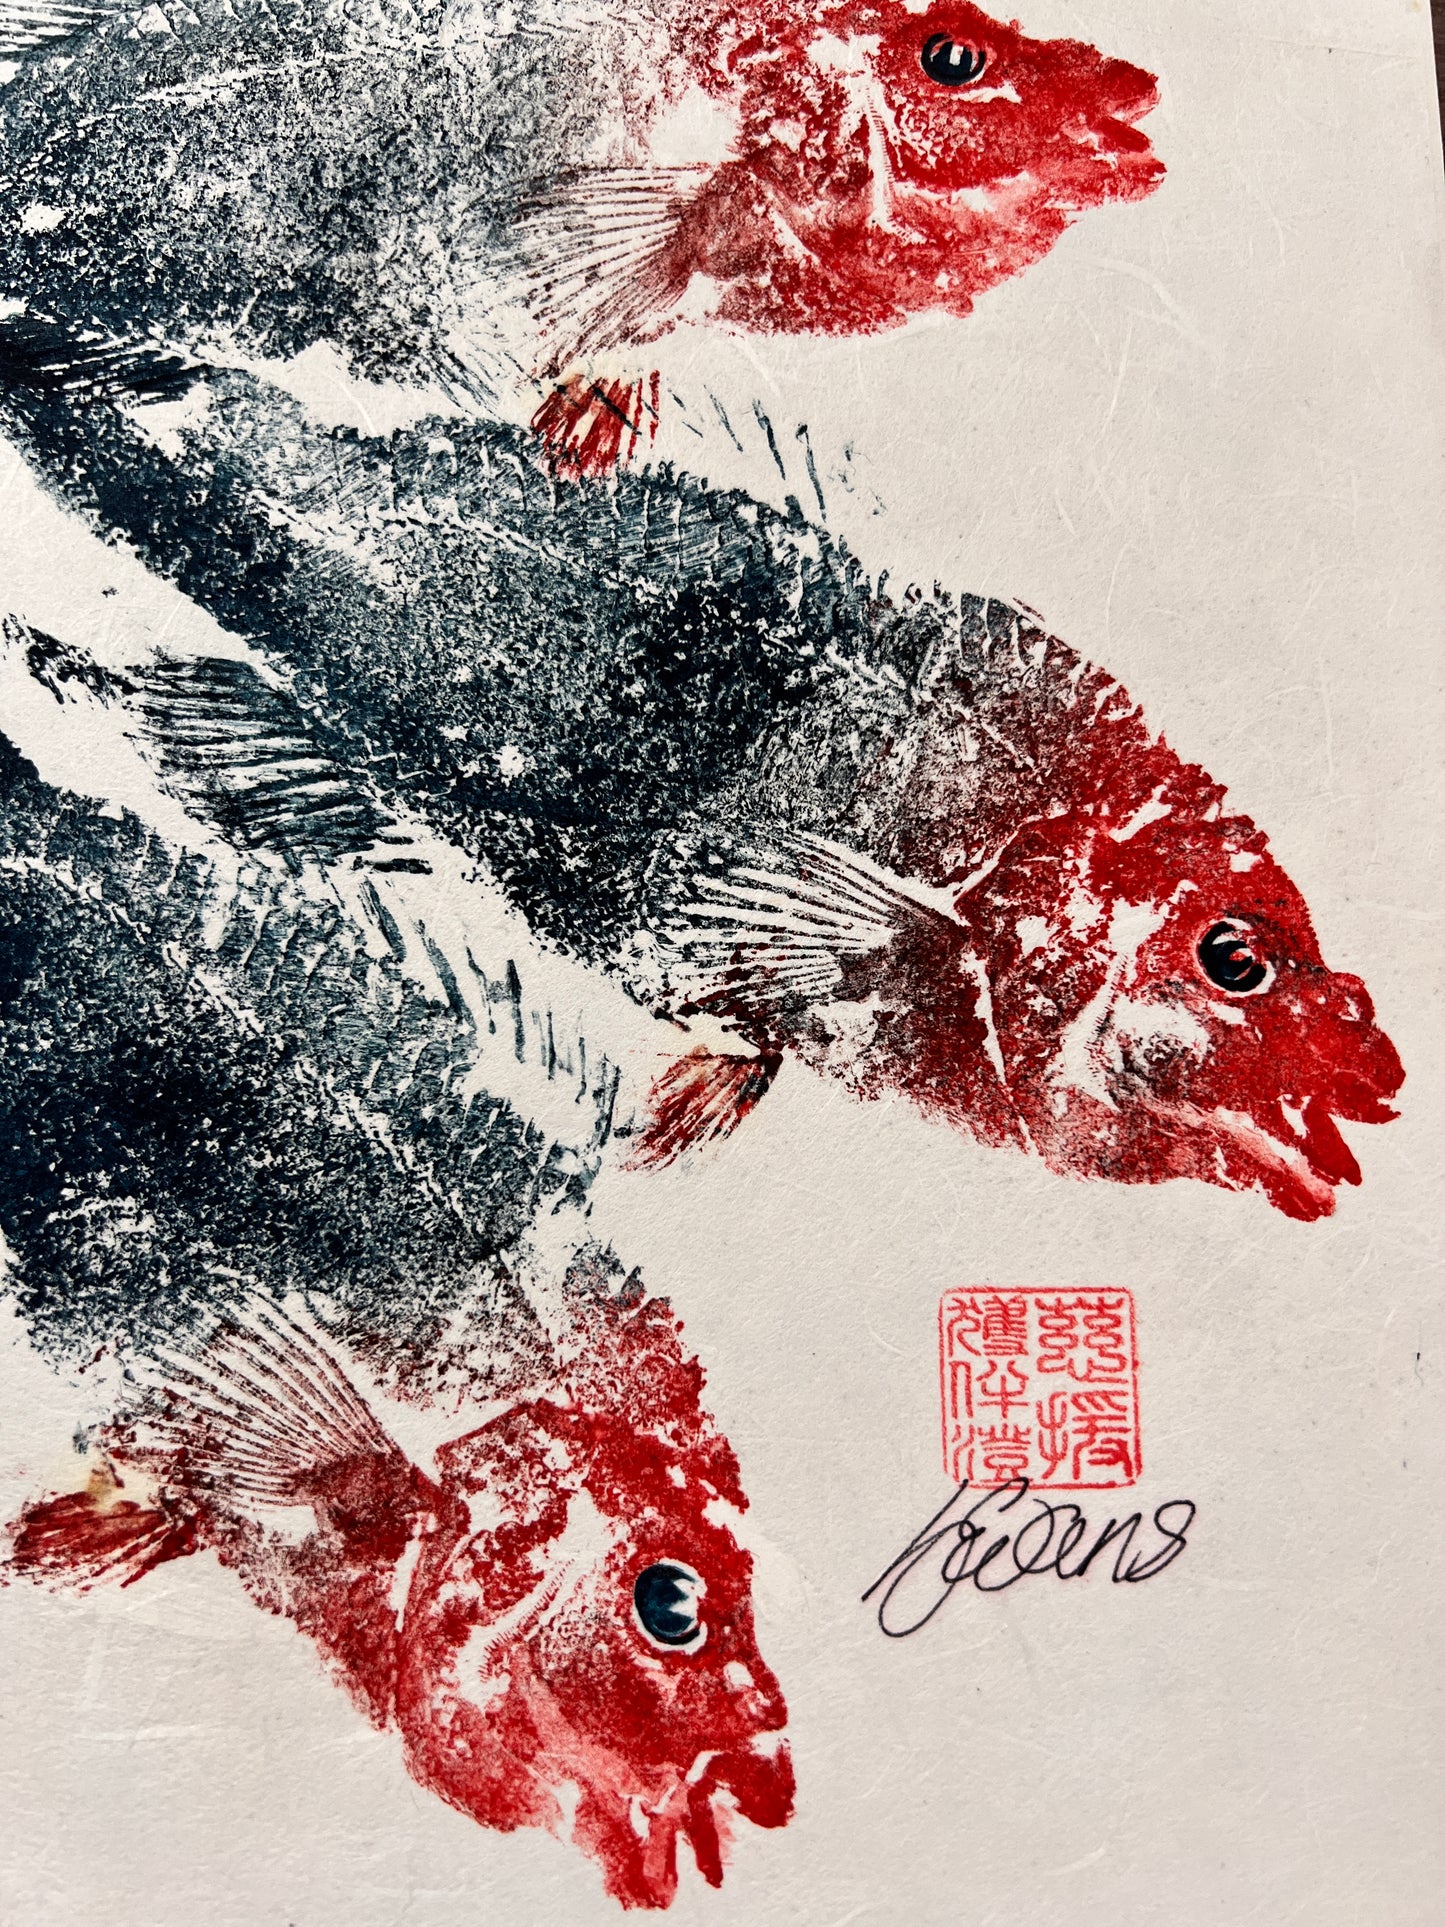 Menai Strait Wrasse Gyotaku Print